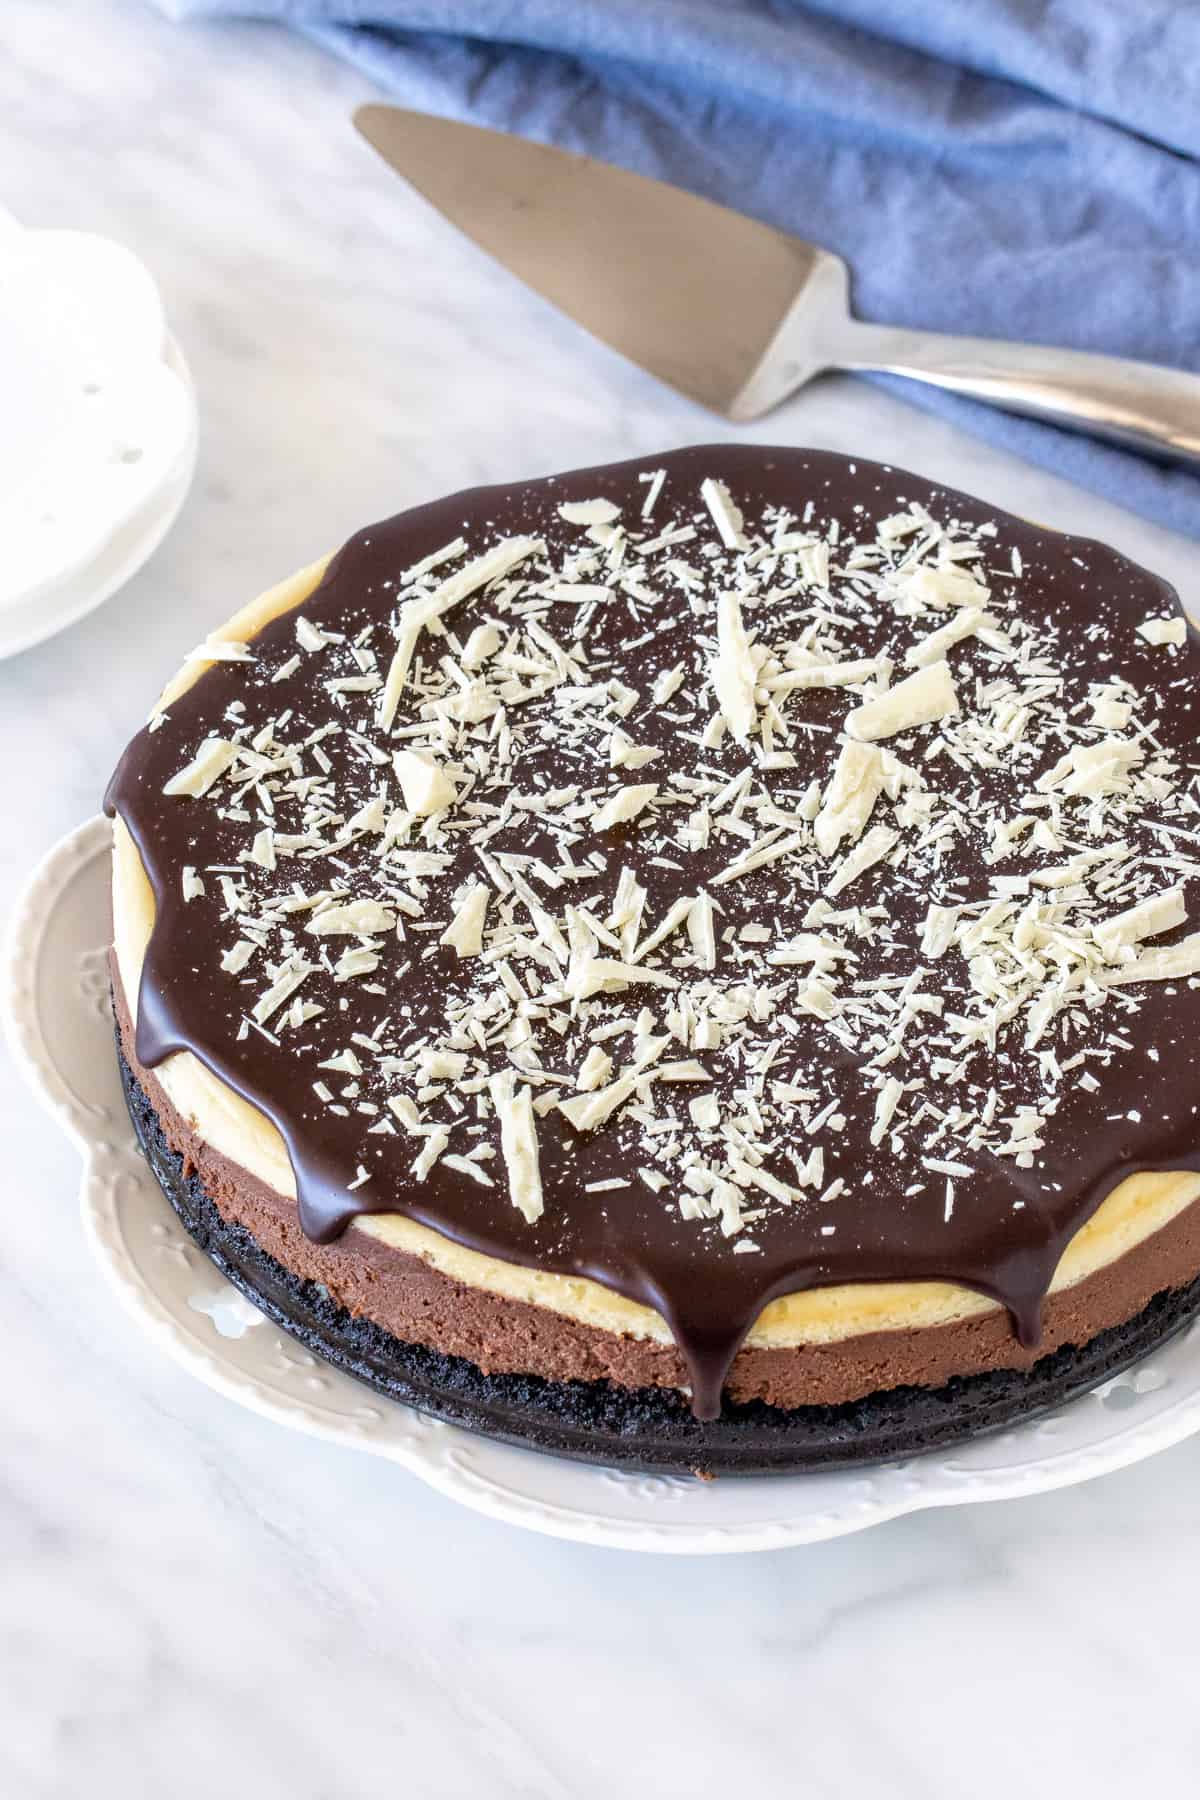 Cheesecake topped with chocolate ganache and white chocolate shavings